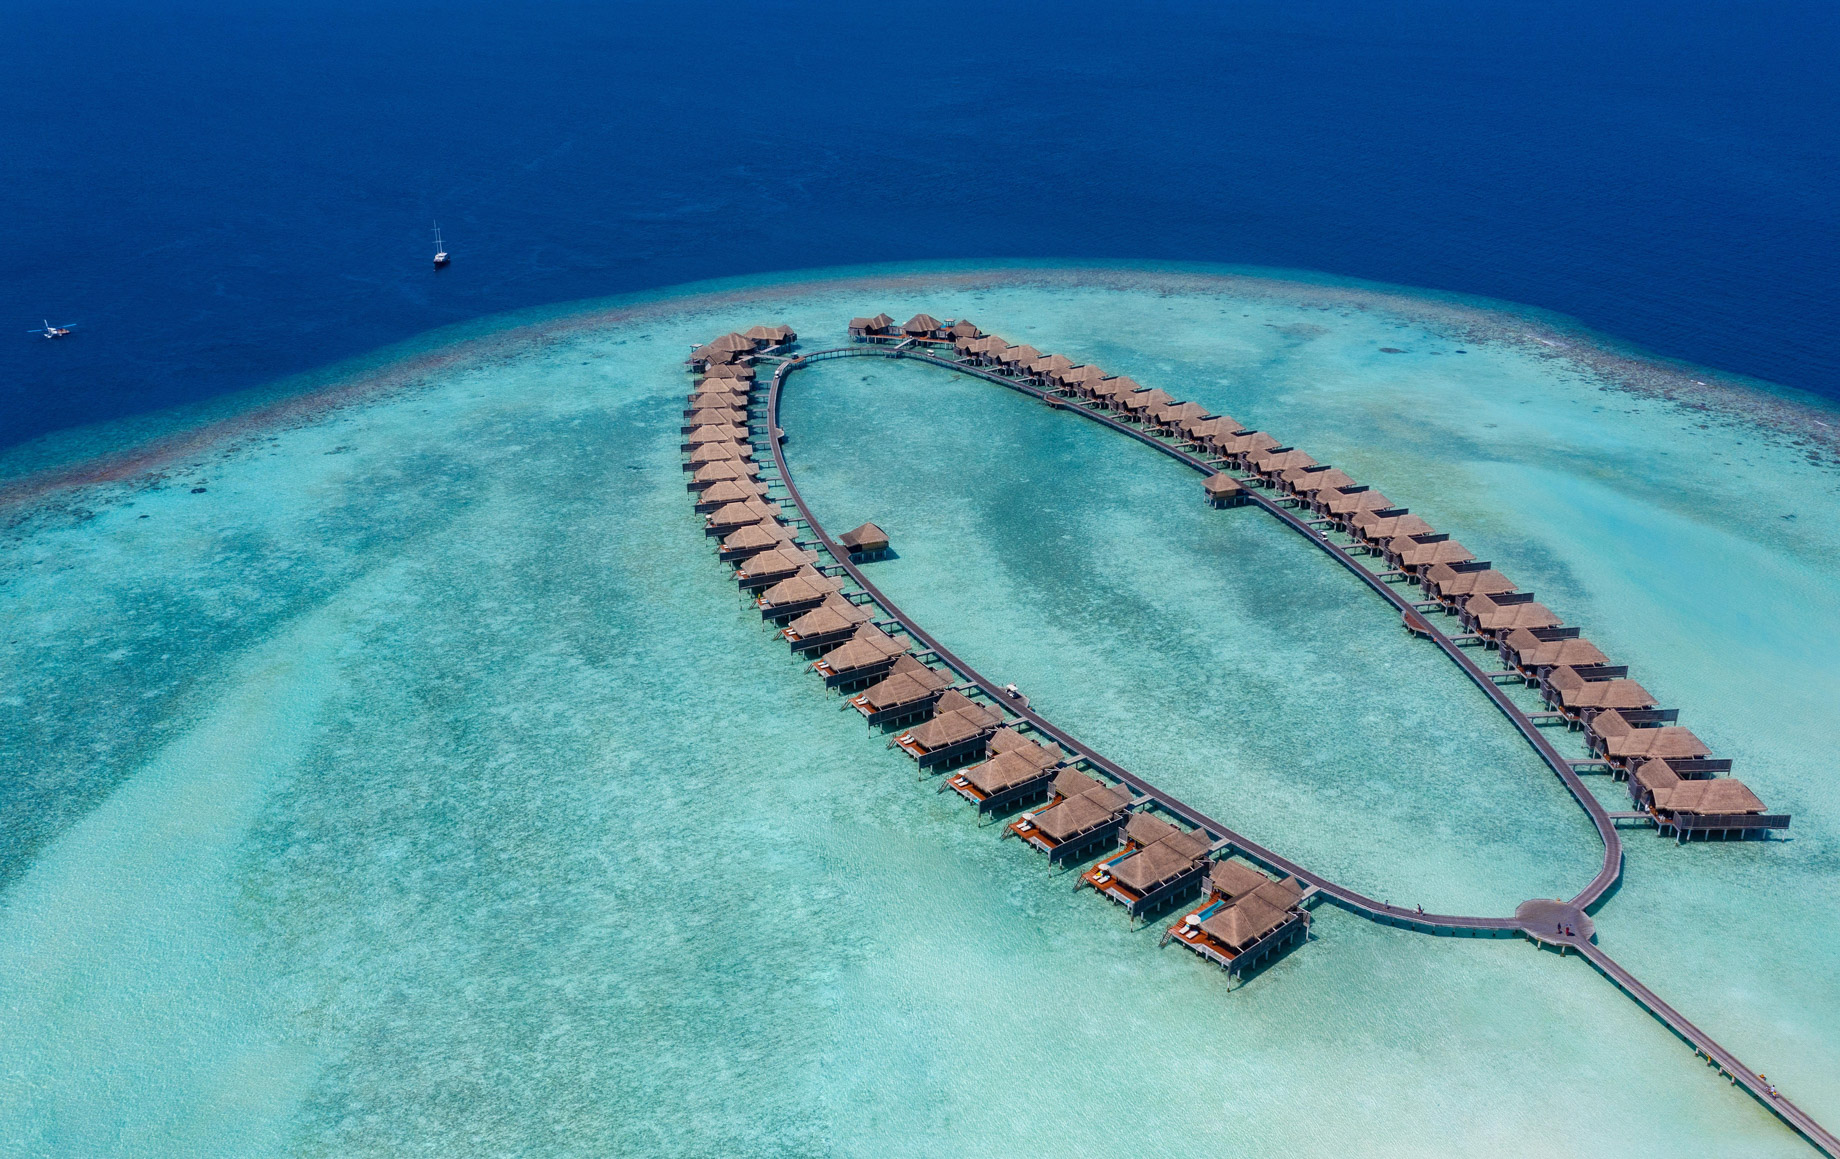 Anantara Kihavah Maldives Villas Resort – Baa Atoll, Maldives – Overwater Villas Jetty Aerial View